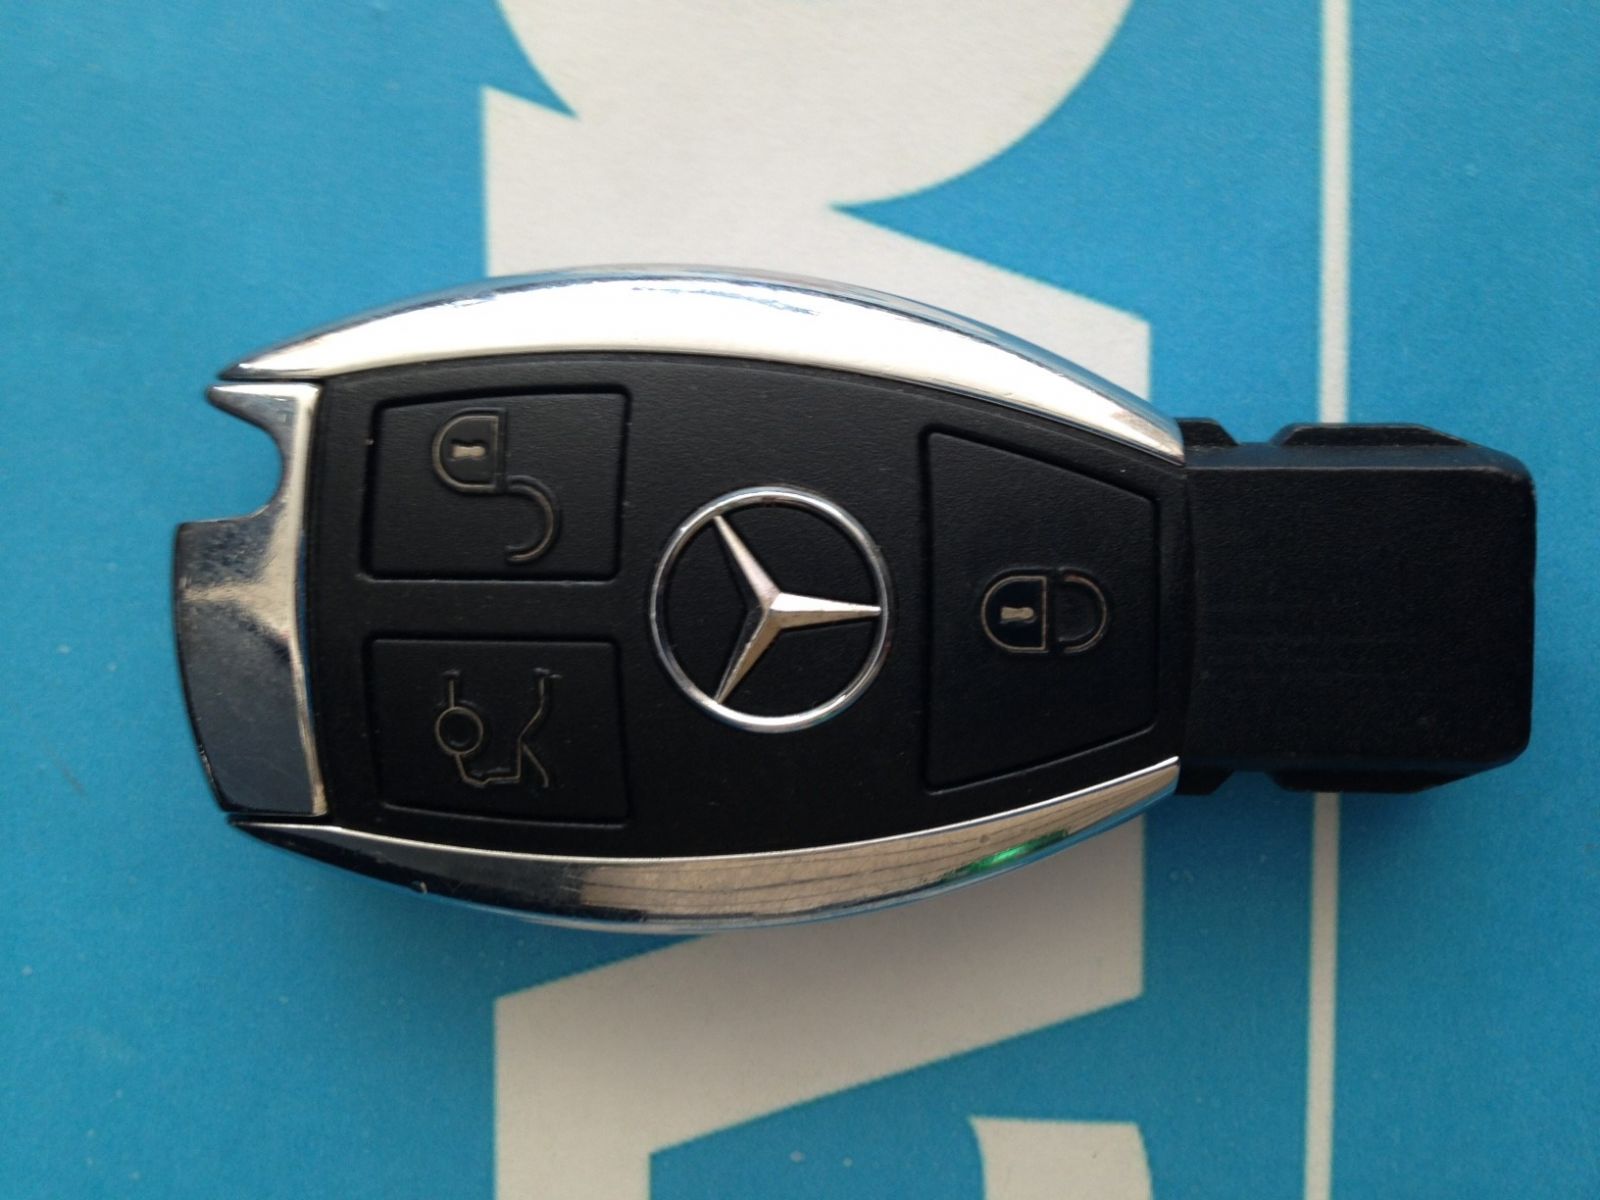 Key for Merces Benz